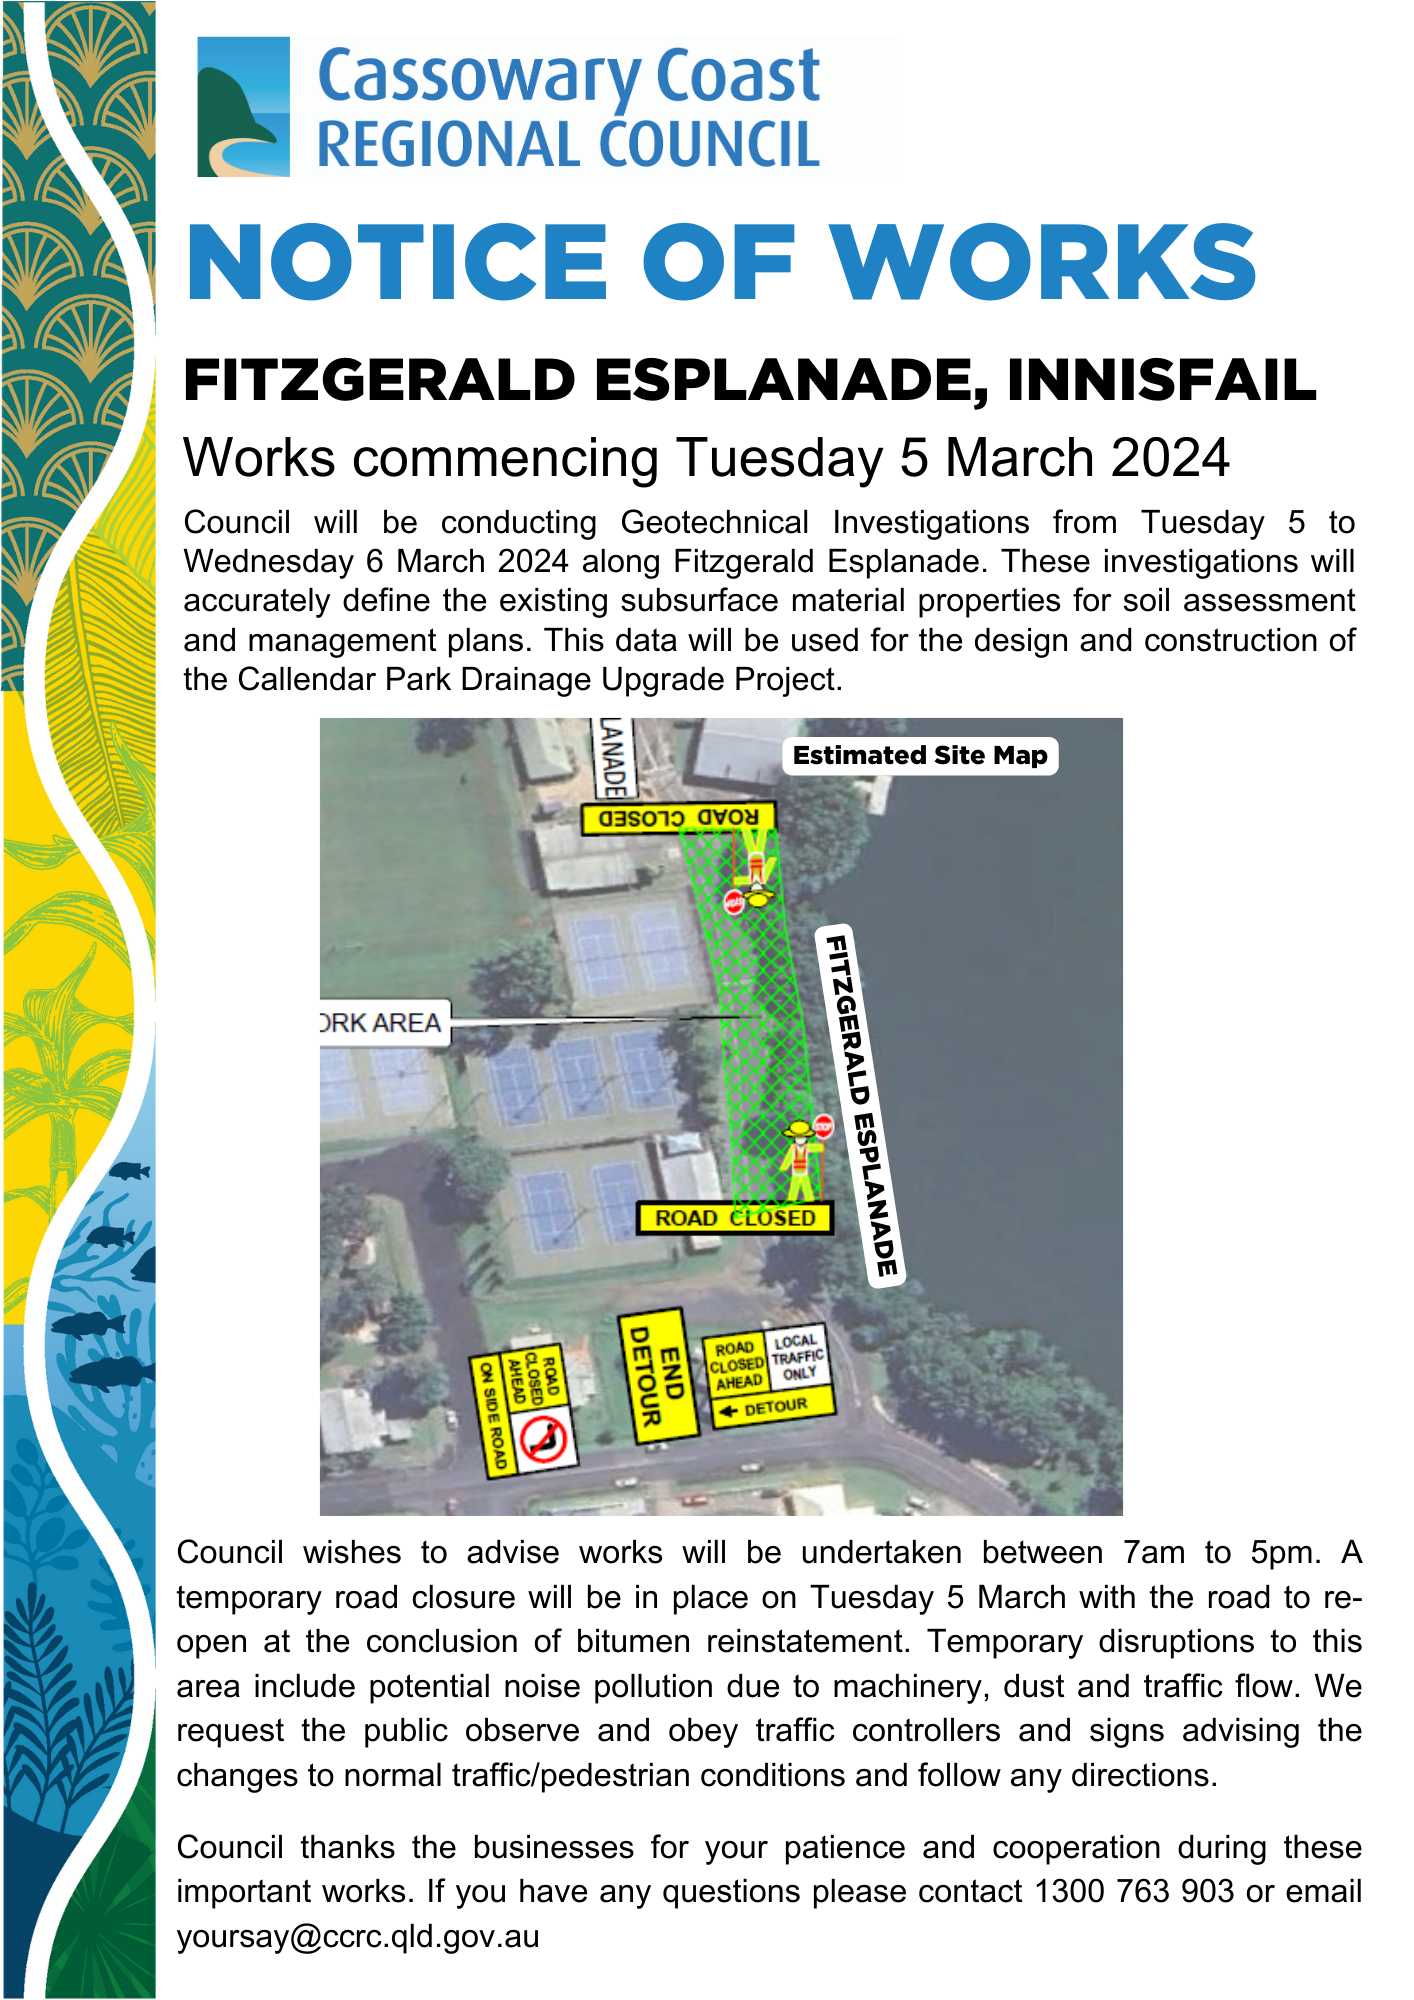 Notice of works fitzgerald esplanade